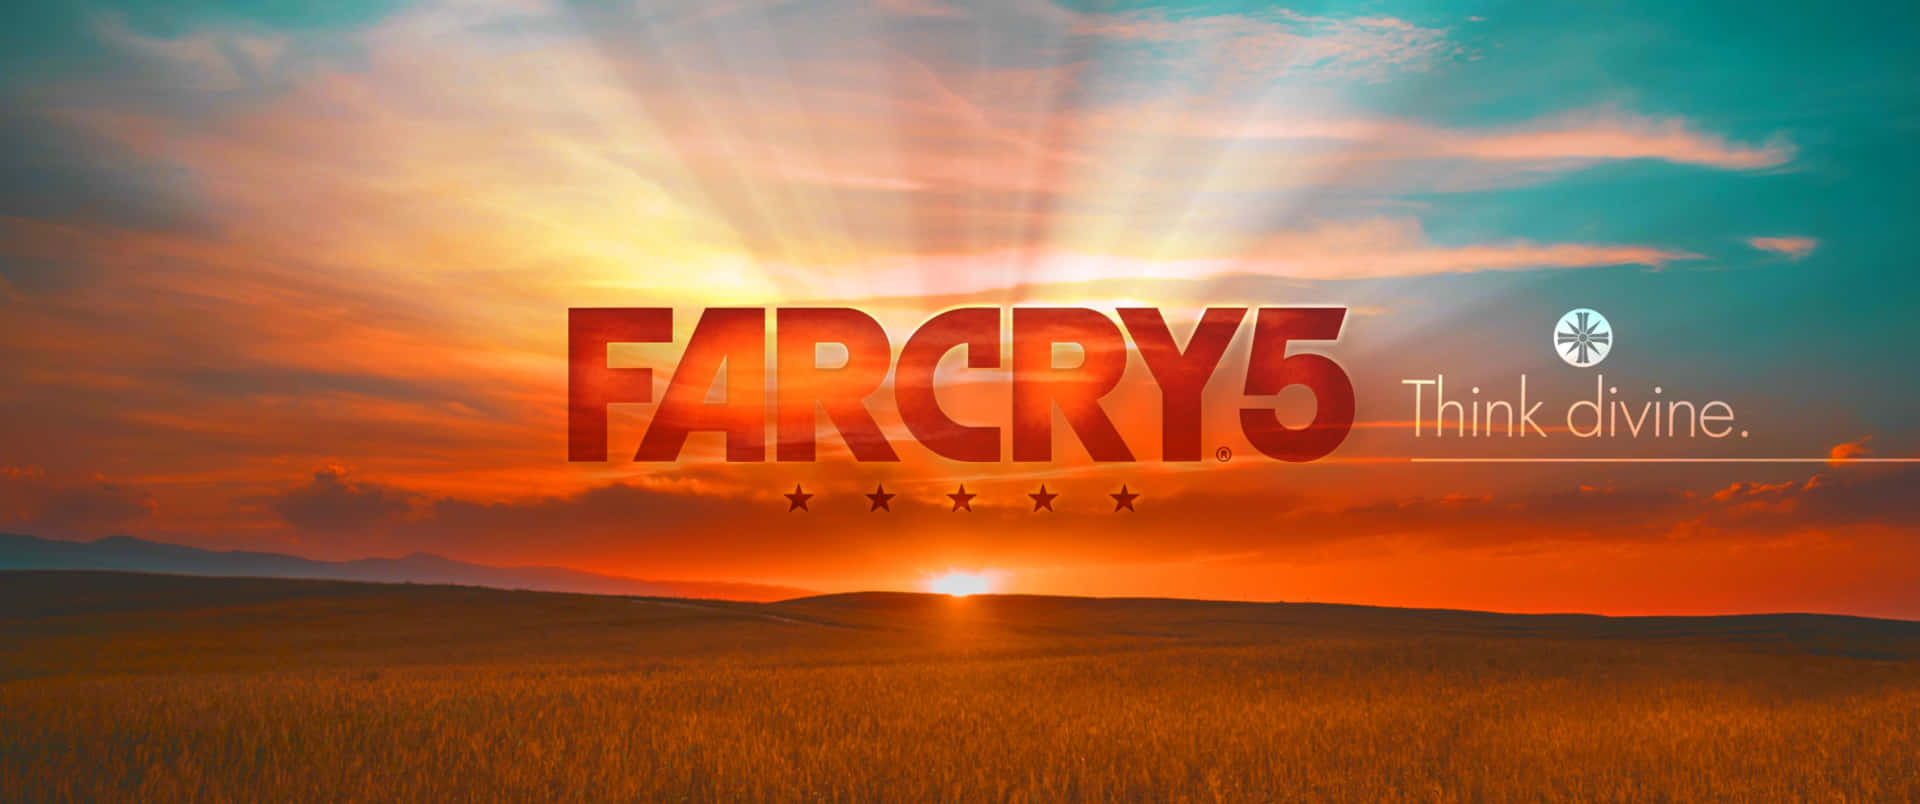 3440x1440p Fondods De Far Cry 5